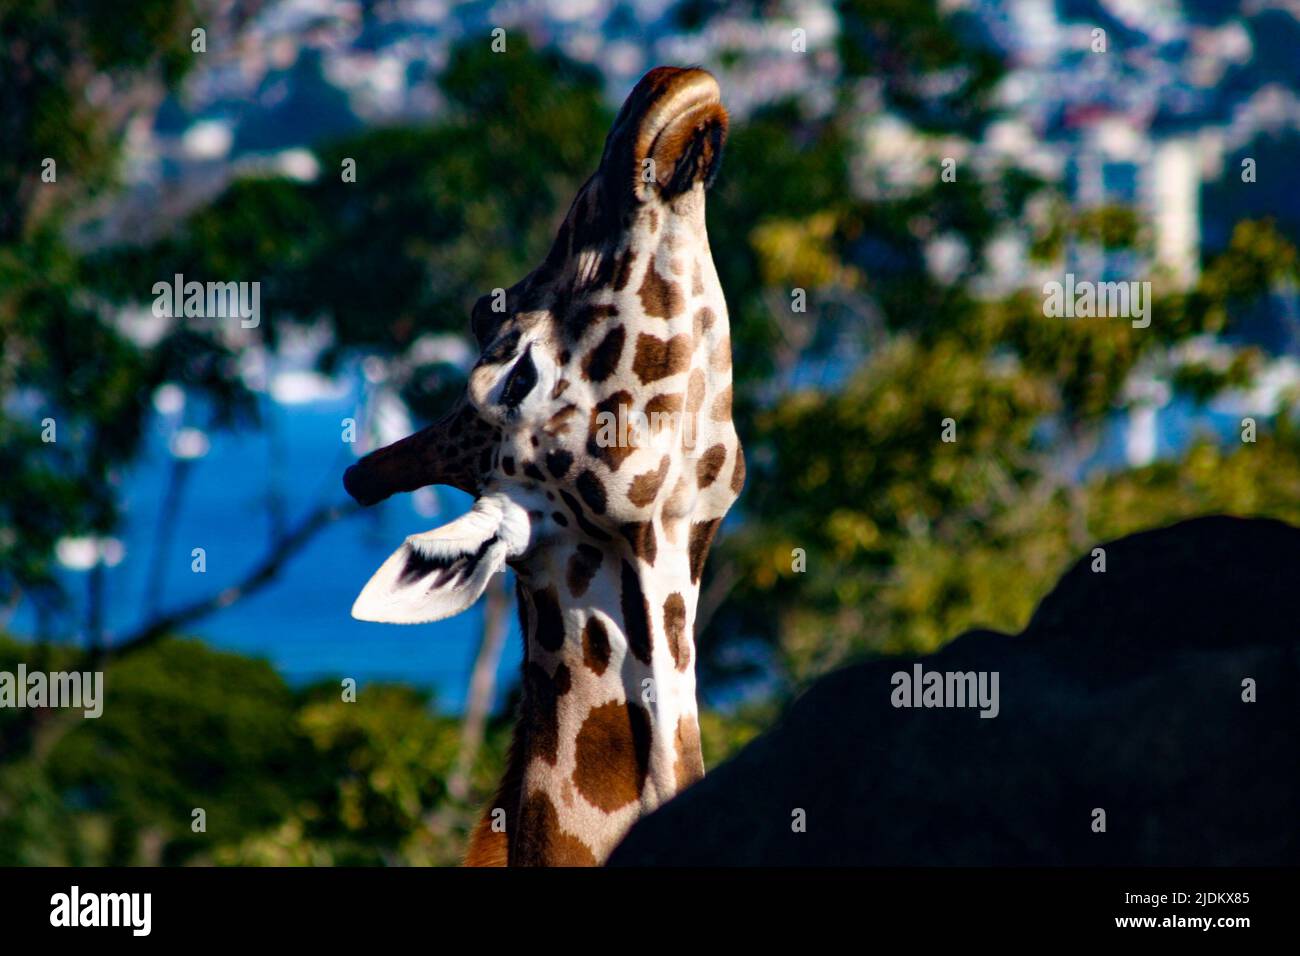 Giraffe looking upwards Stock Photo